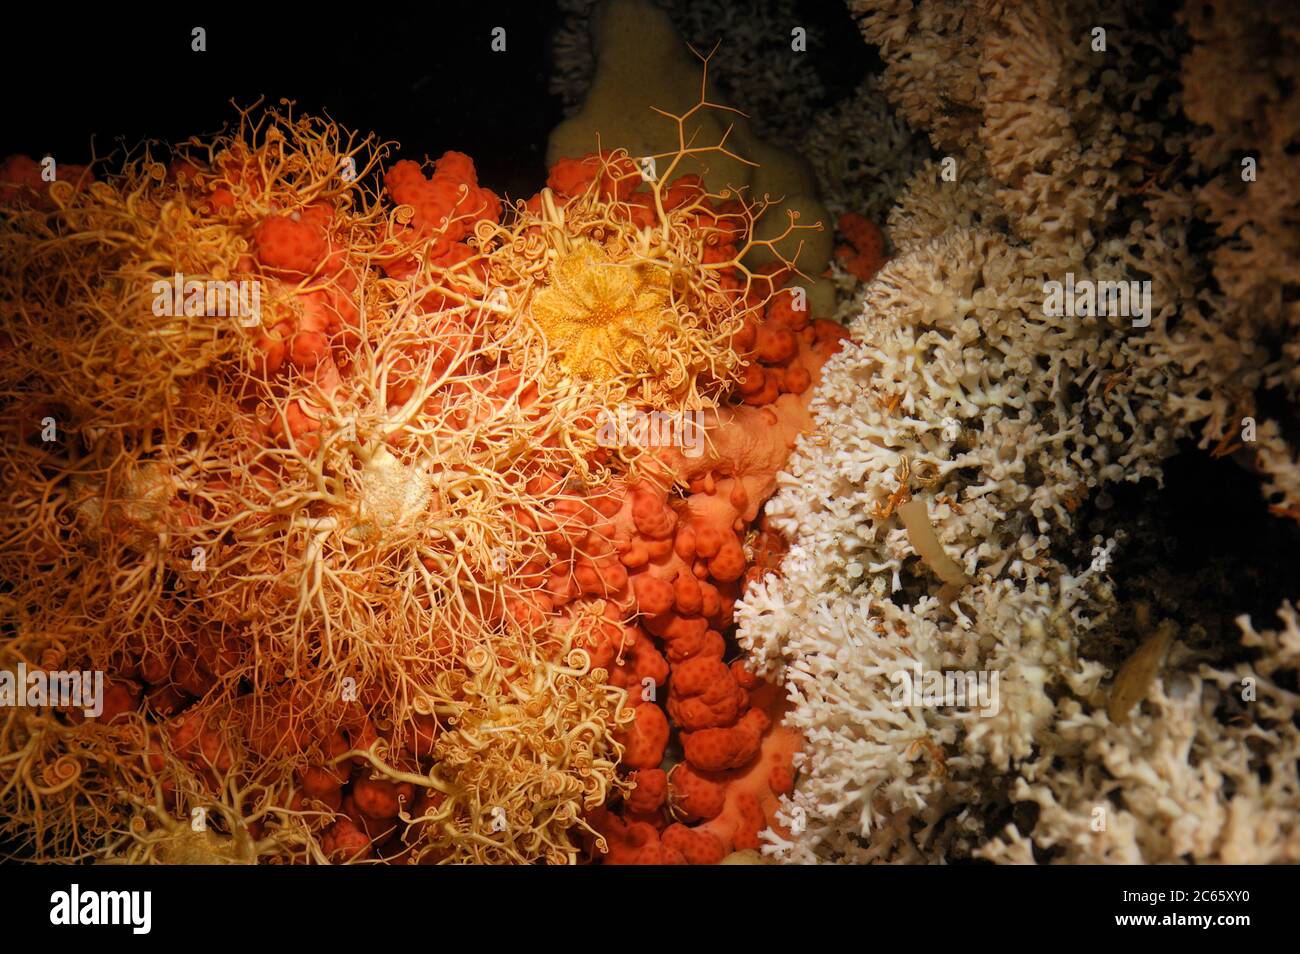 Bubblegum coral (Paragorgia arborea) with basket star (Gorgonocephalus caputmedusae) with in the live Lophelia pertusa reef in Trondheimfjord, North Atlantic Ocean, Norway Stock Photo